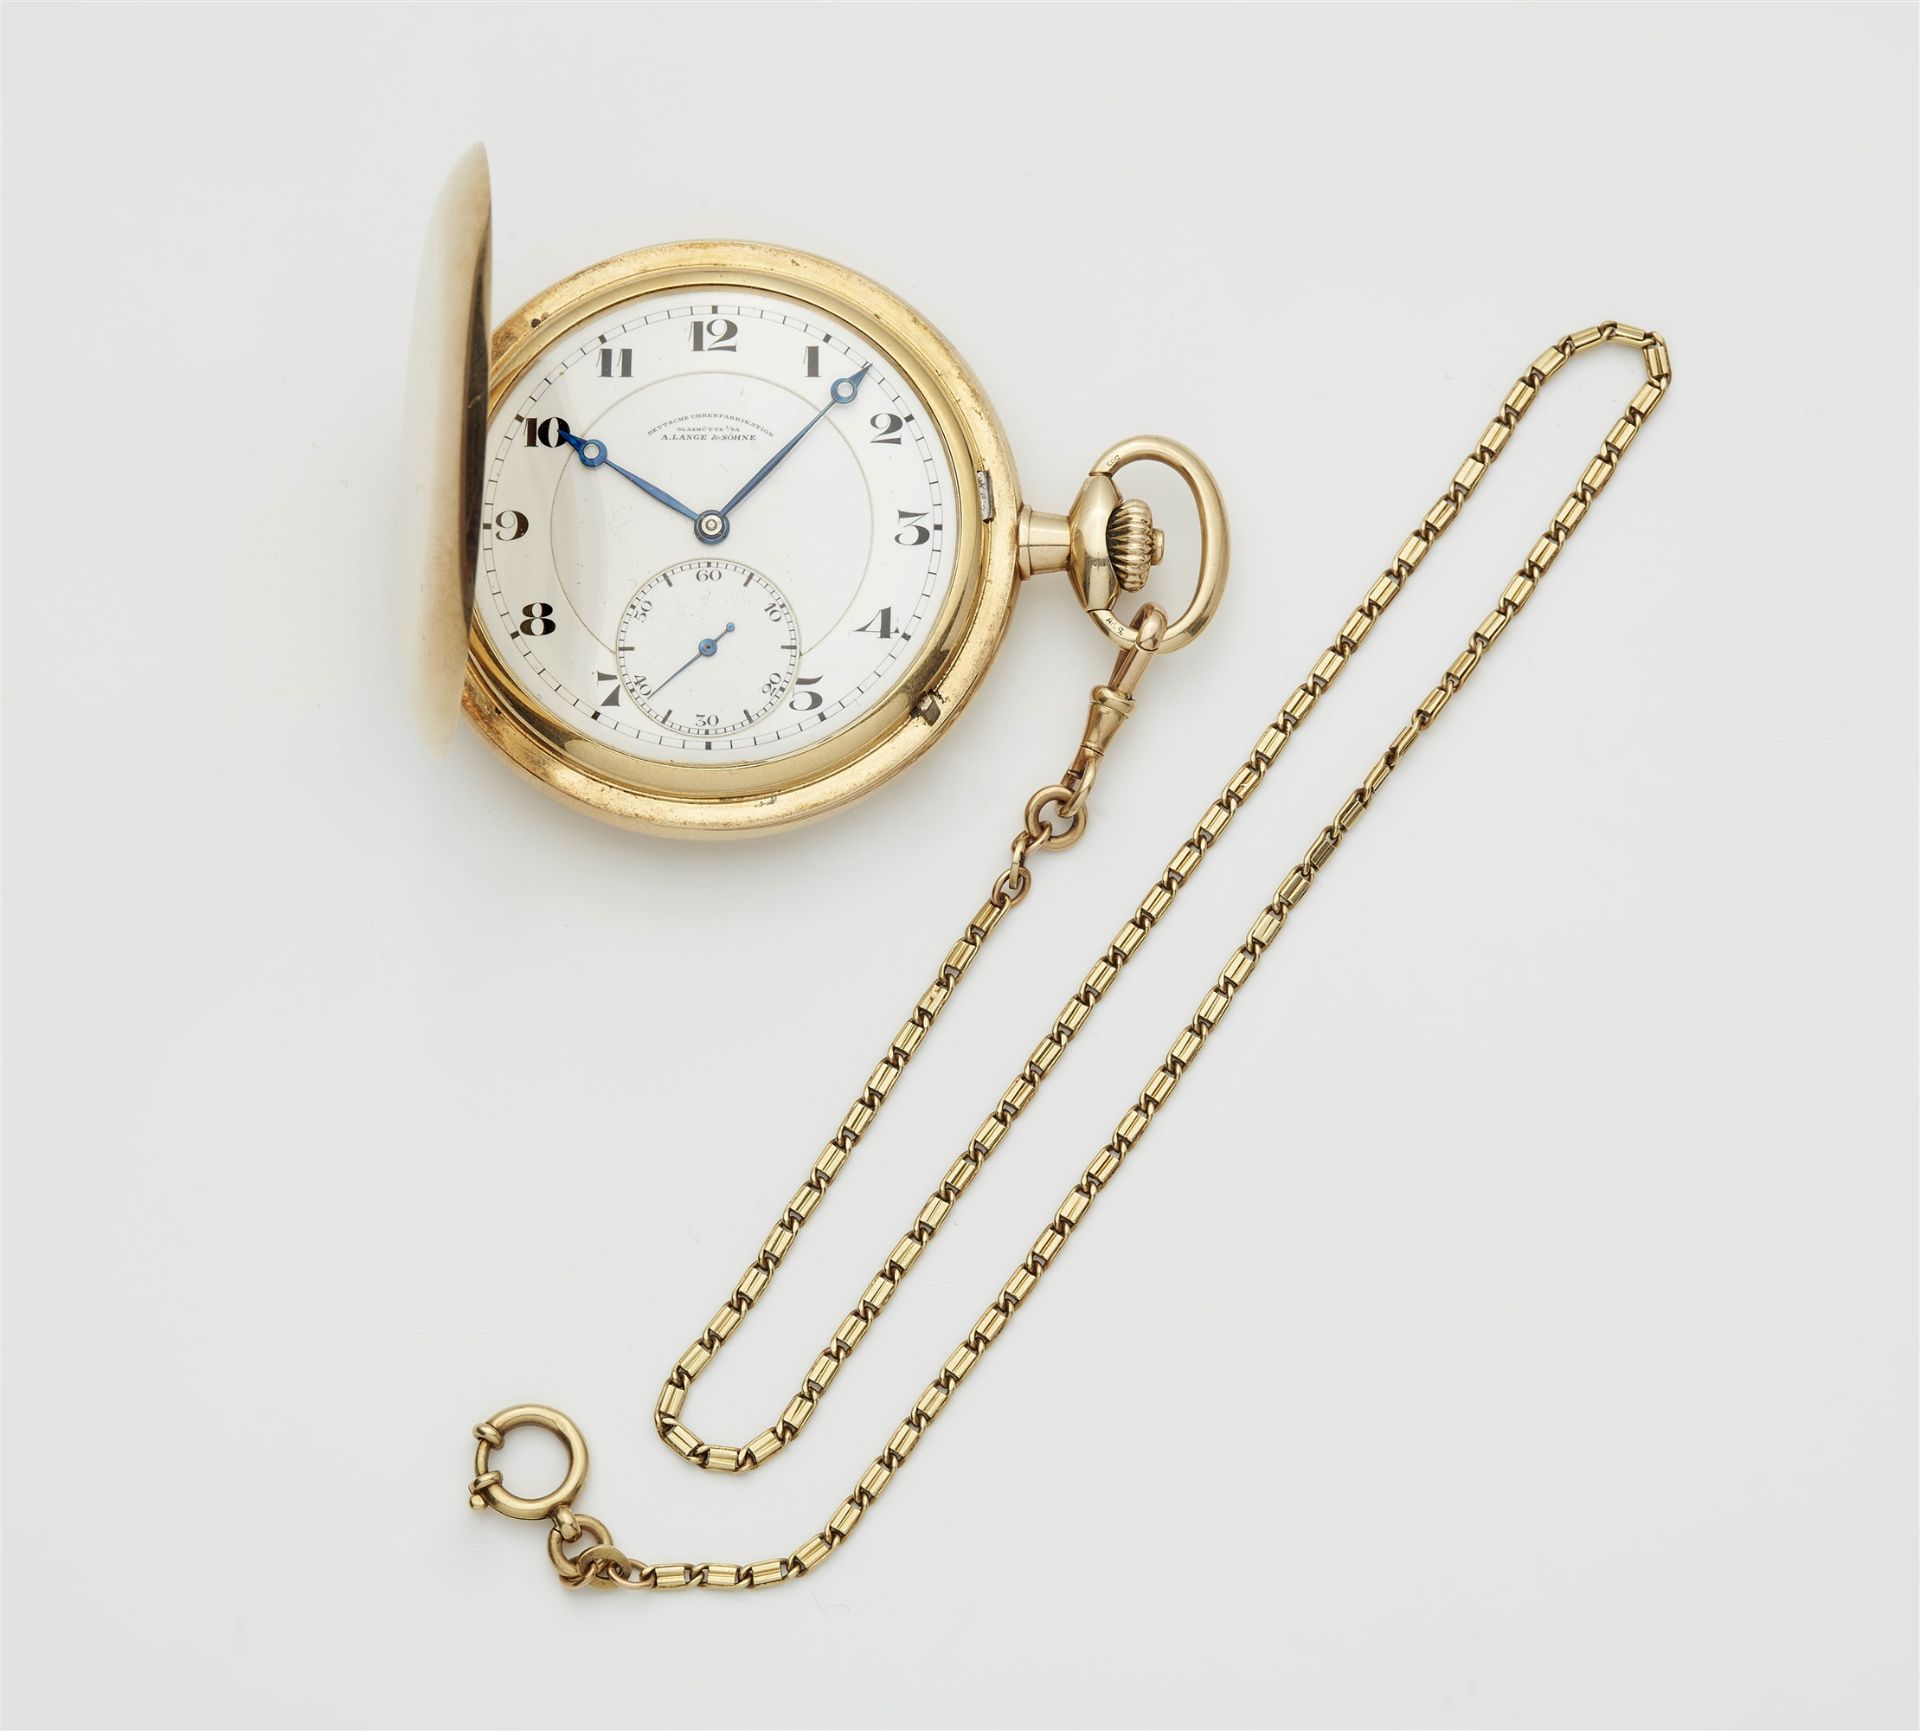 A 14k gold A. Lange & Söhne Savonnette pocket watch.